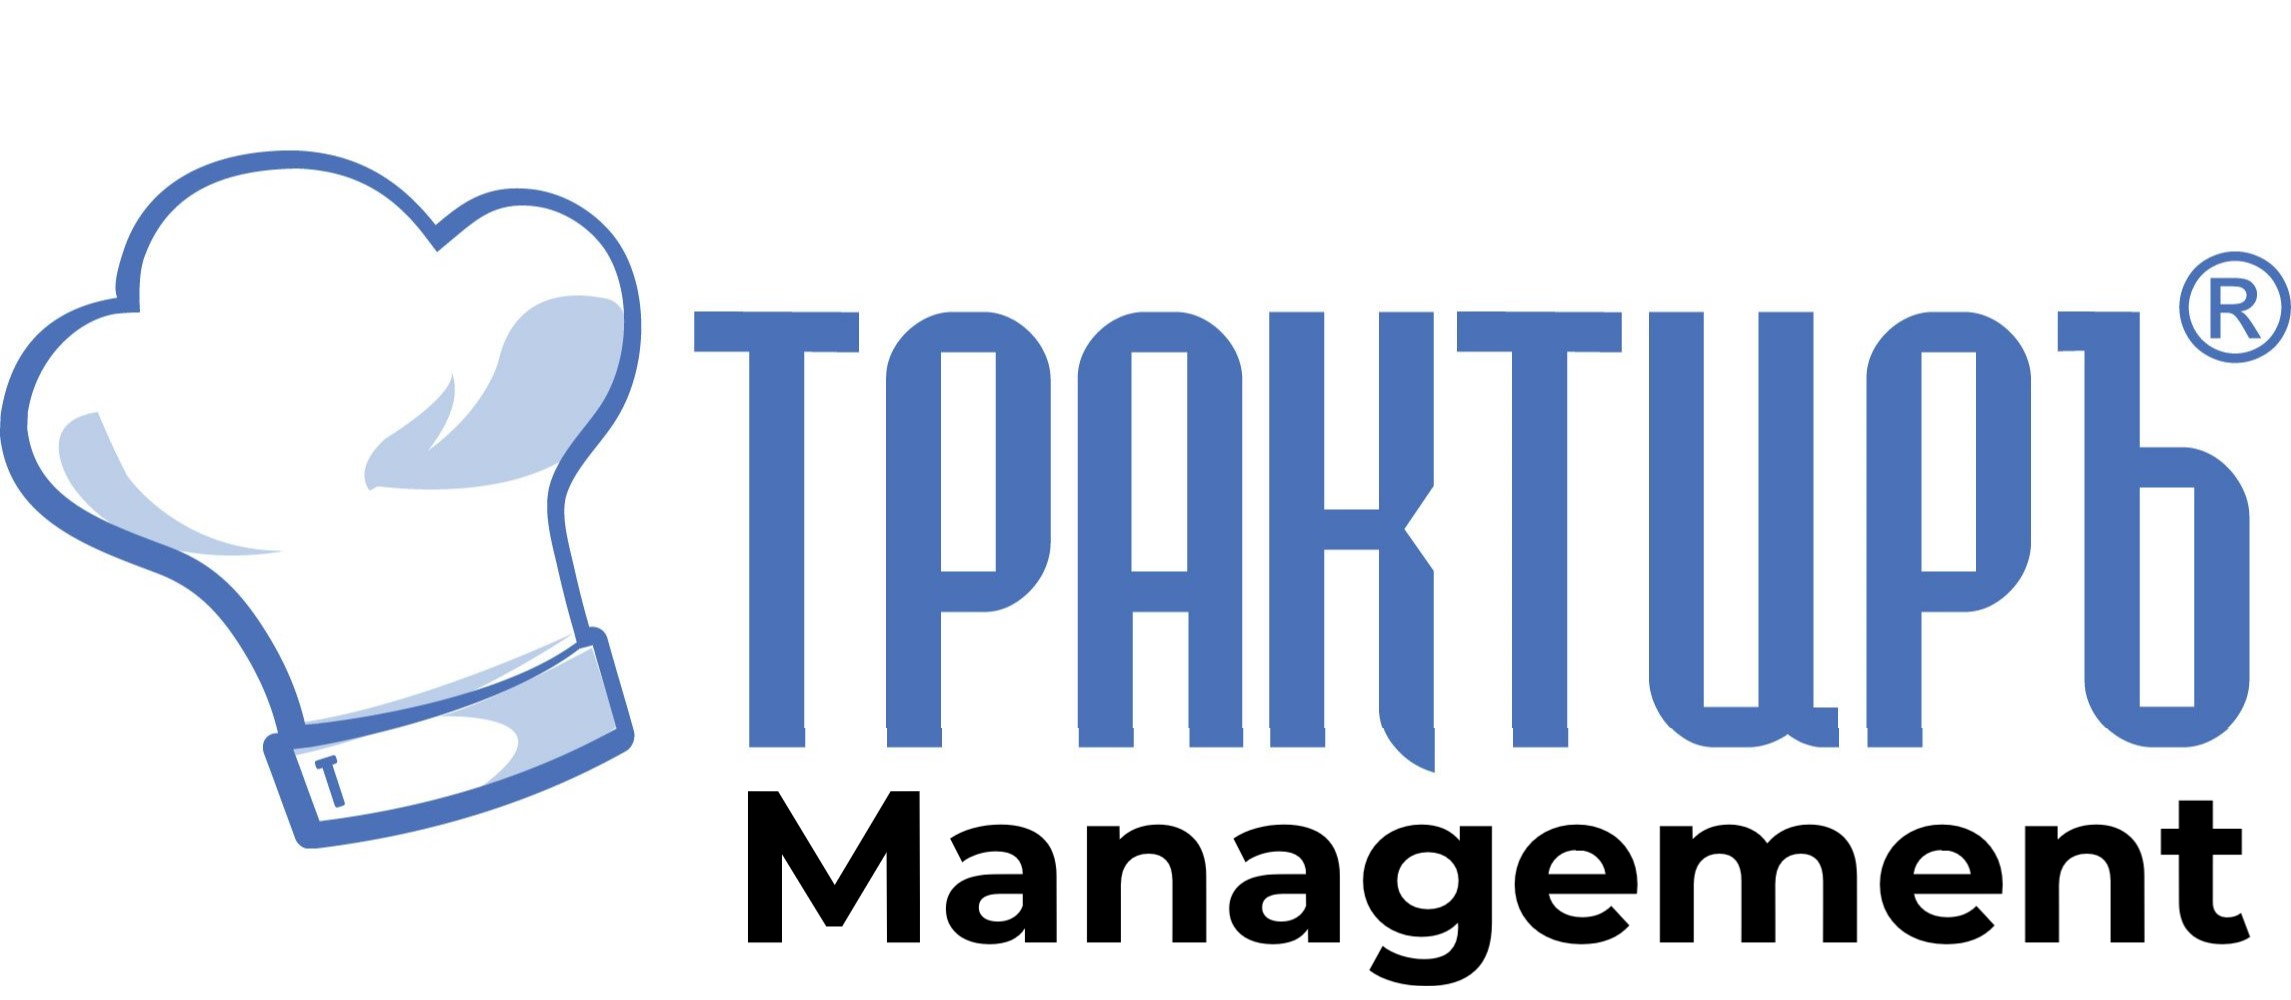 Трактиръ: Management в Ярославле